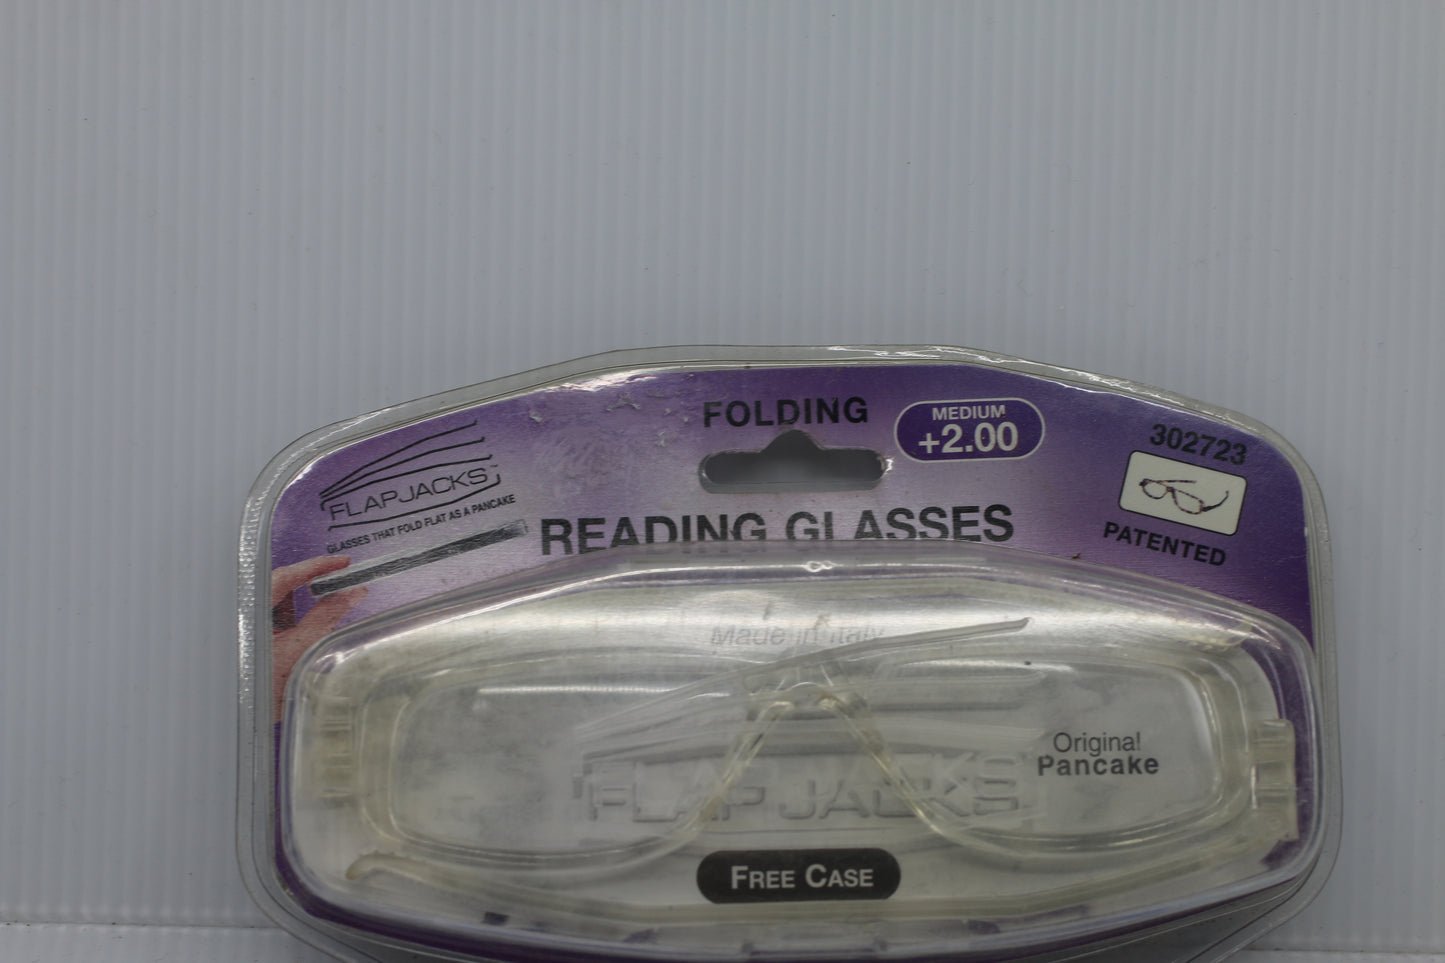 + 2.00 FLAP JACKS Reading Glasses *BRAND NEW / SEALED ORIGINAL PACKAGE*